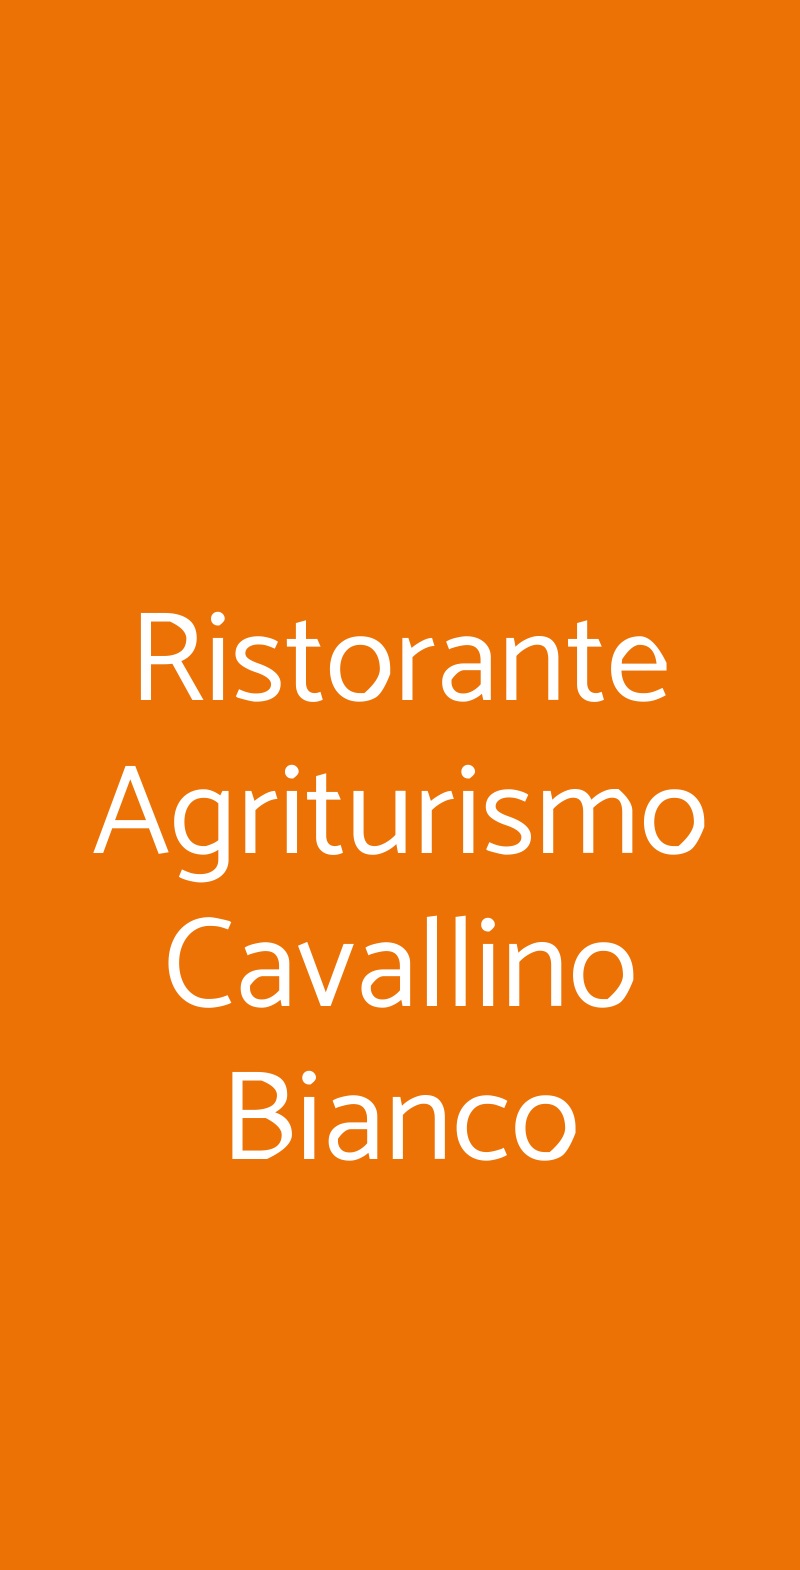 Ristorante Agriturismo Cavallino Bianco Viareggio menù 1 pagina